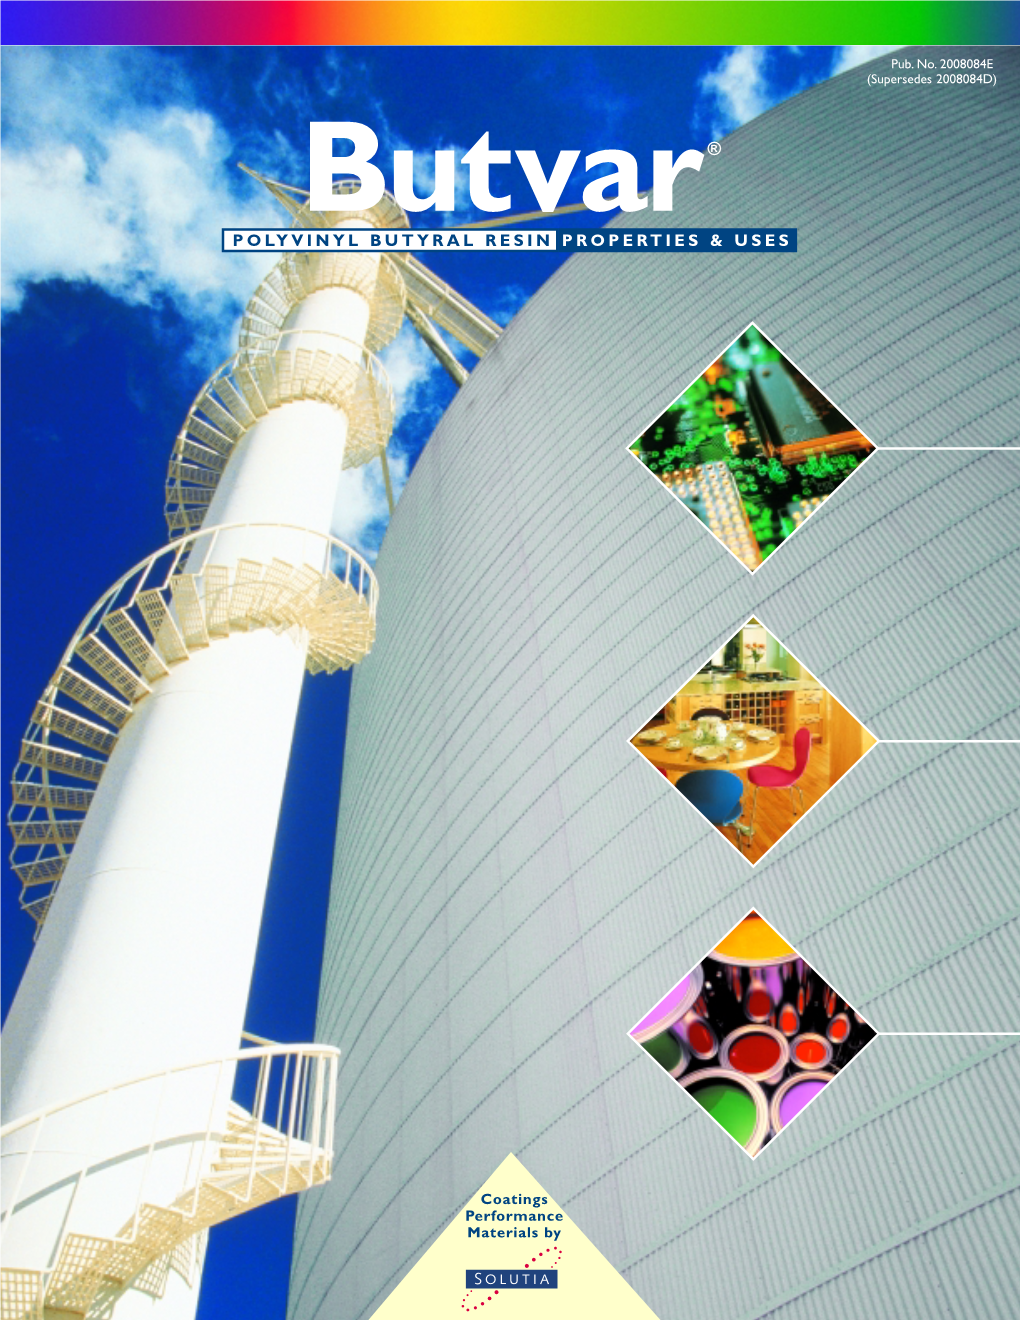 Butvar Properties and Uses